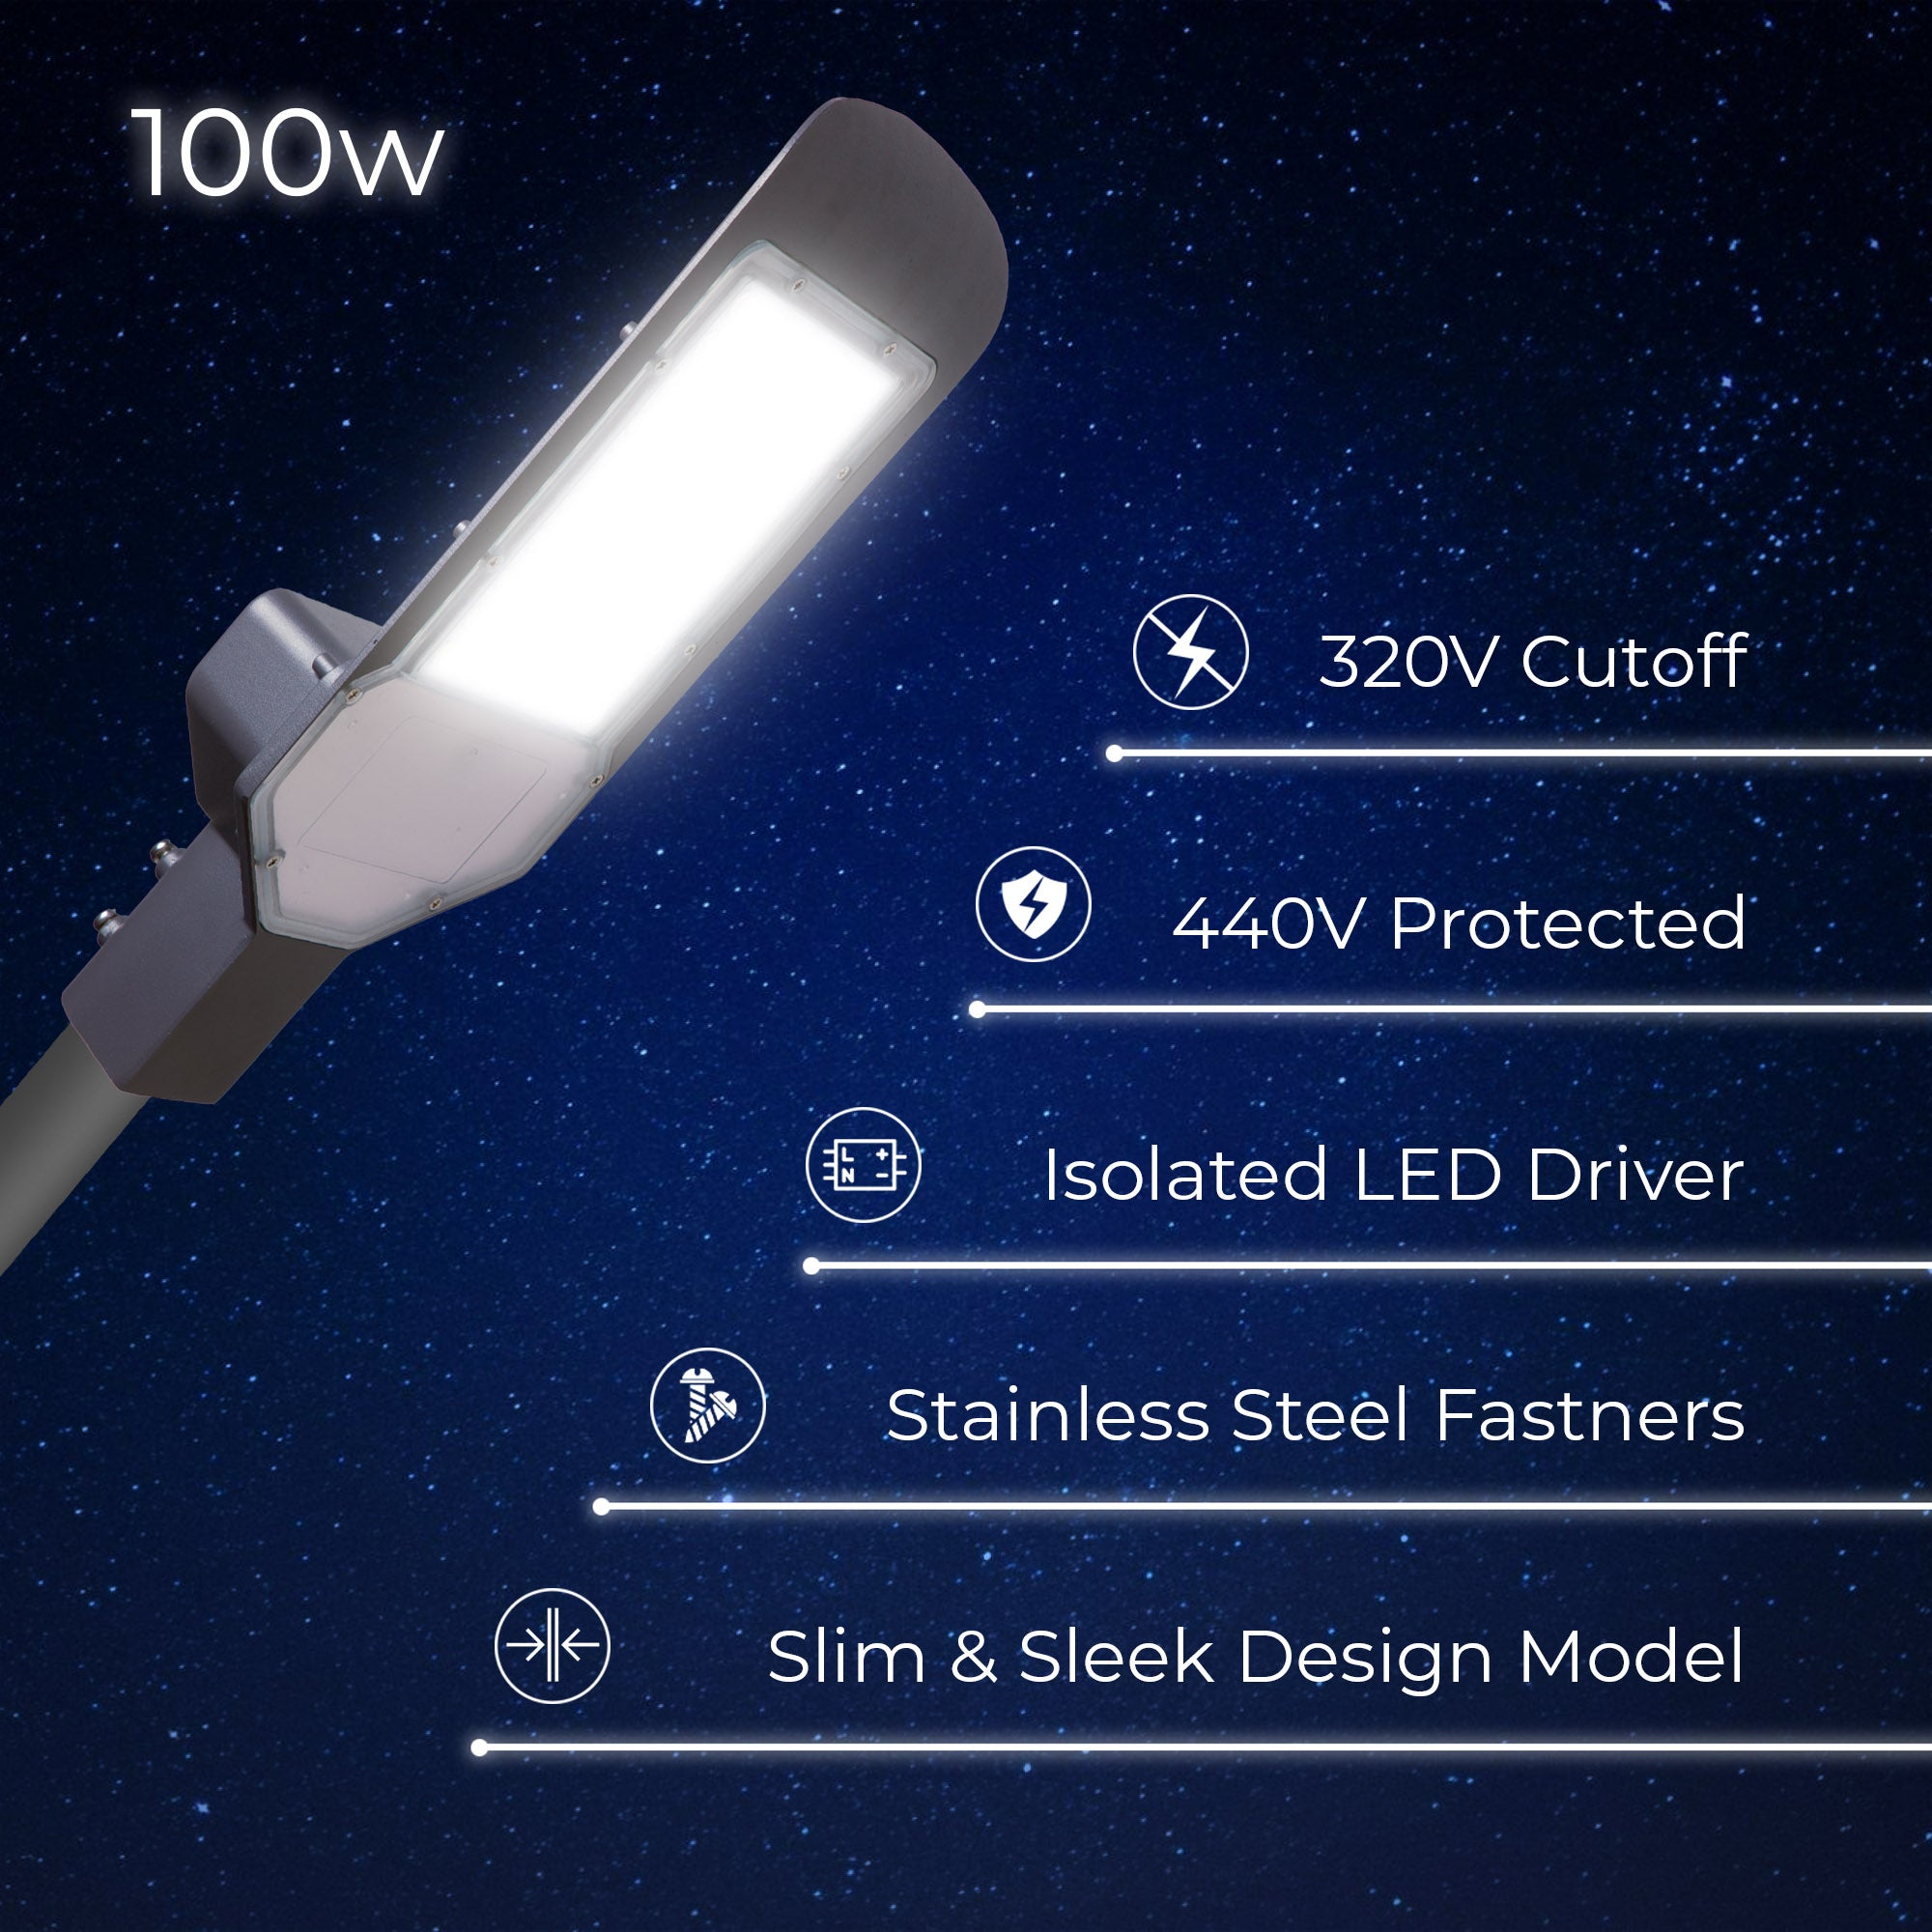 Specifications of Lexa 100W led path light #watts_100w